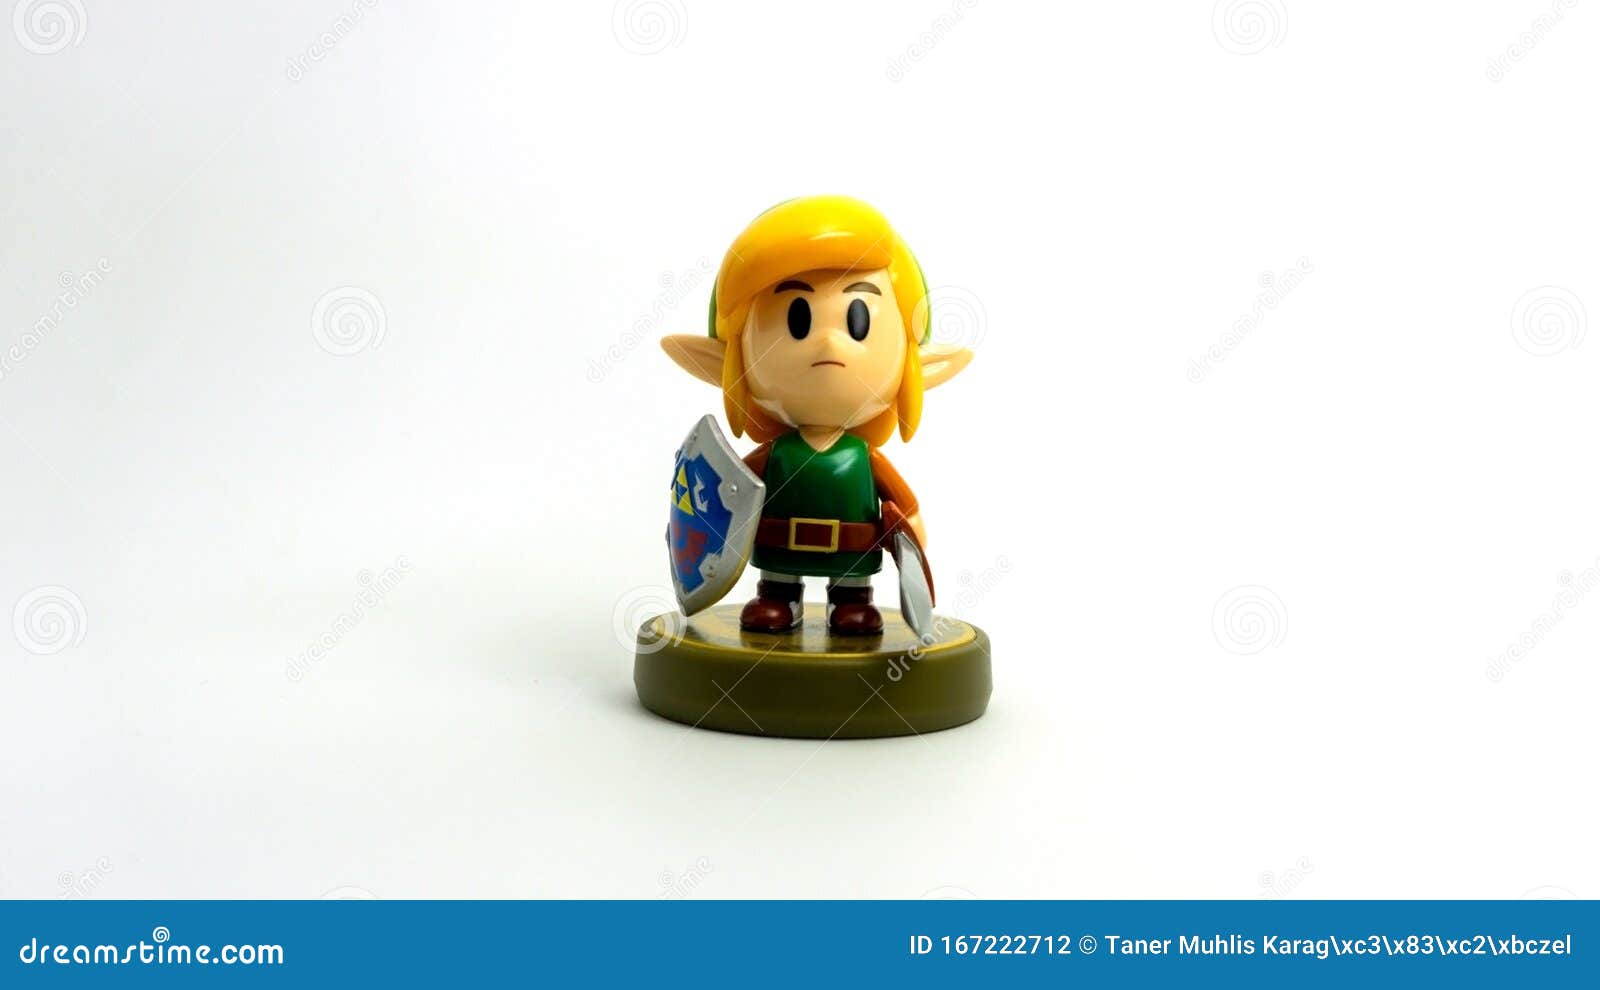 animation possibility Shadow Amiibo Figure for Zelda Links Awakening Remake for Nintendo Switch  Editorial Photography - Image of decoration, sword: 167222712